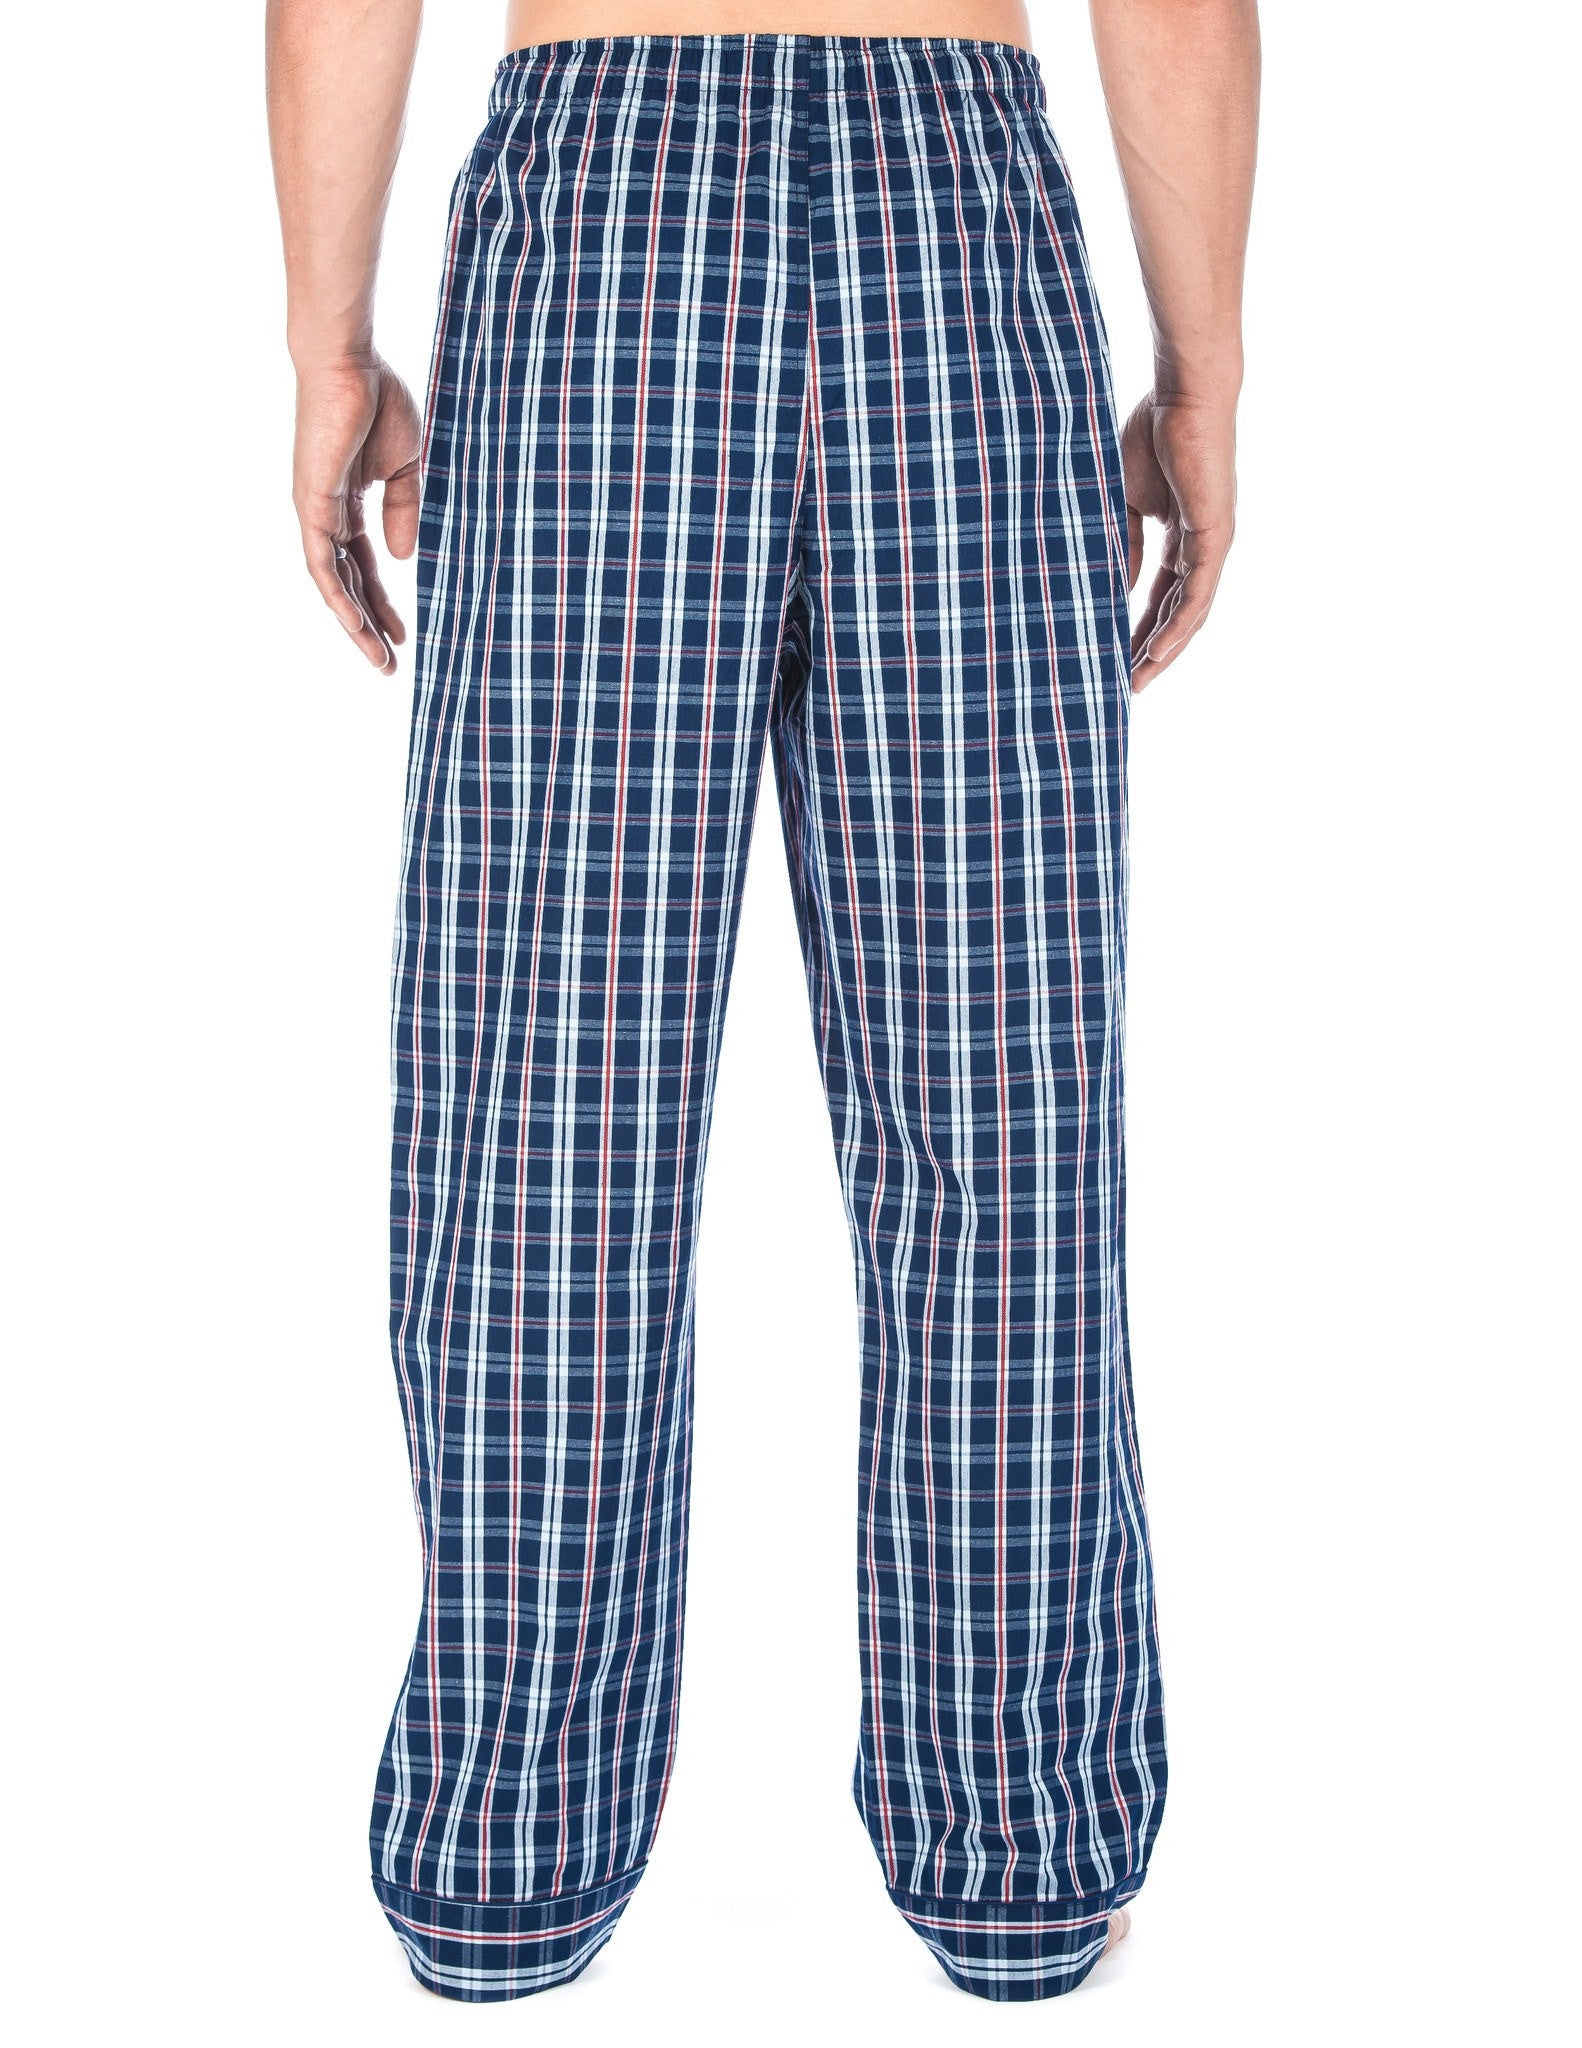 Men's Premium Cotton Lounge/Sleep Pants - 2 Pack – Noble Mount